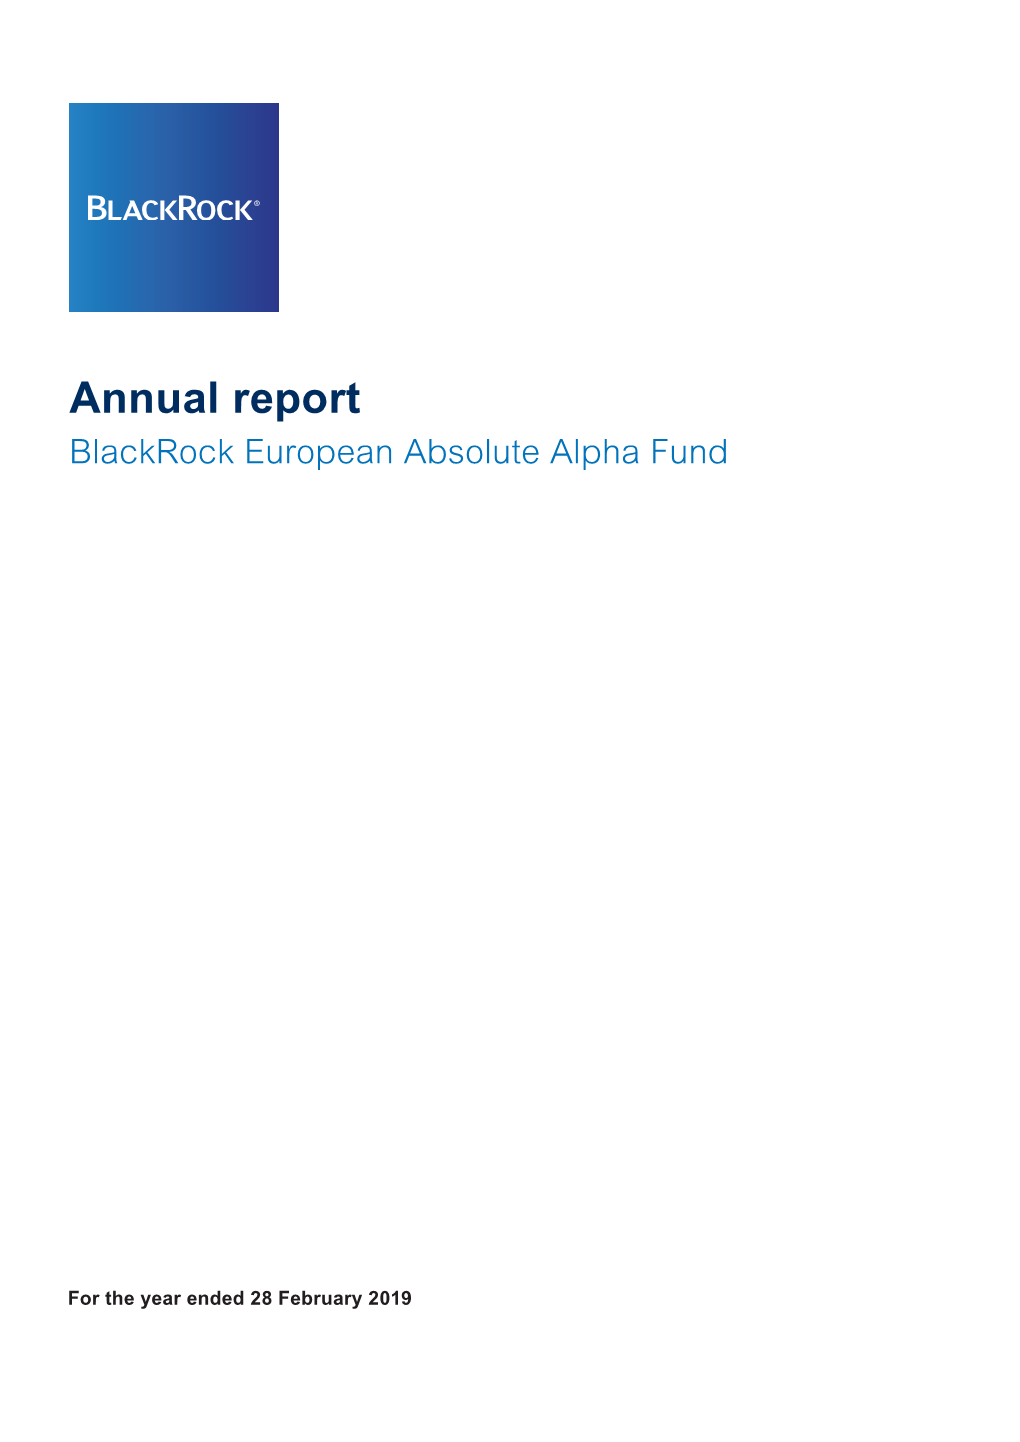 Annual Report Blackrock European Absolute Alpha Fund